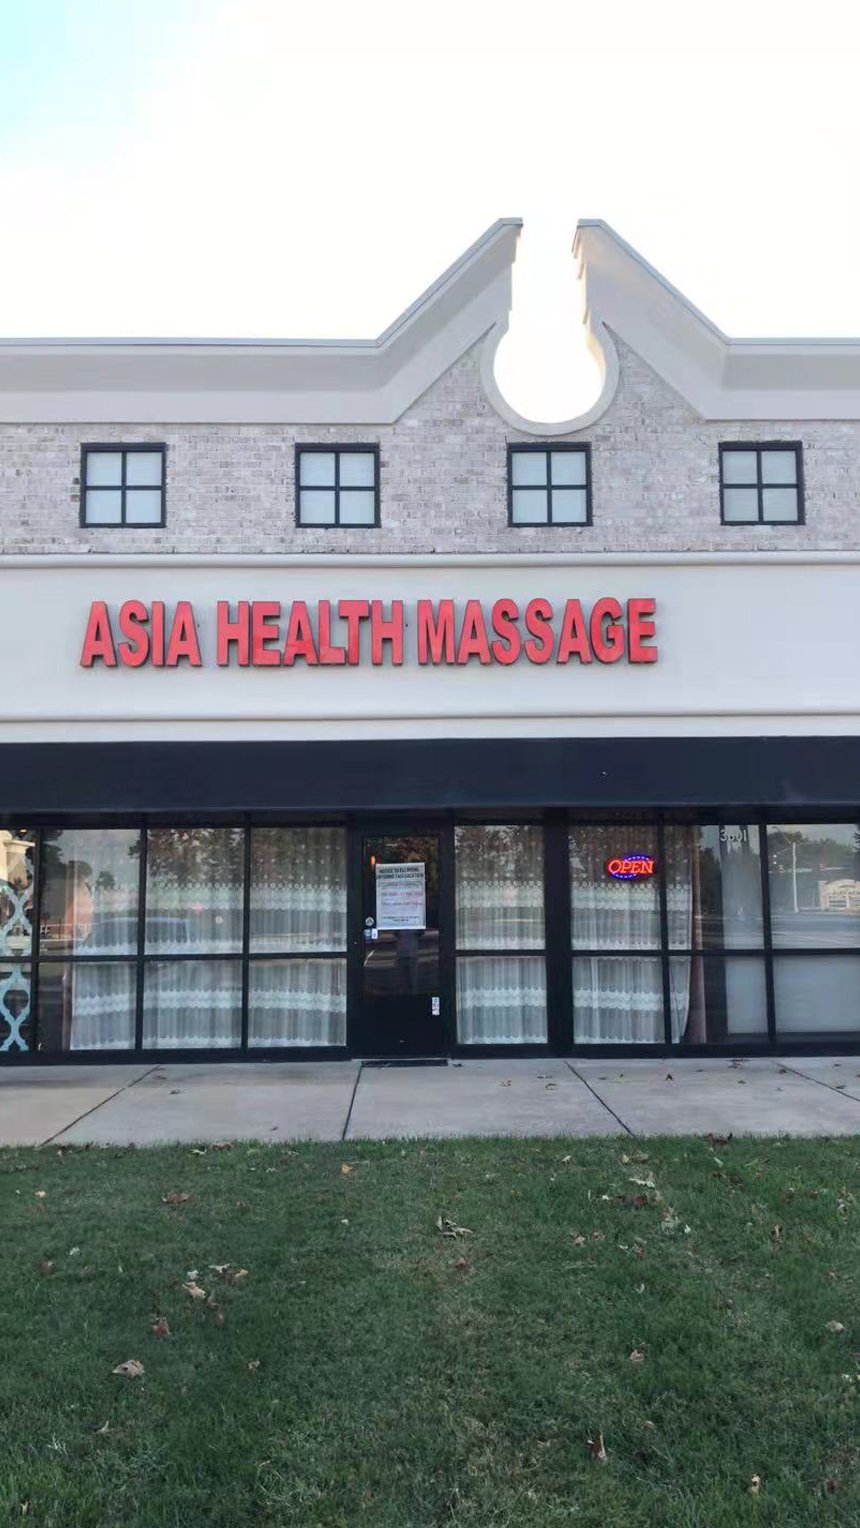 Asia Health Massage